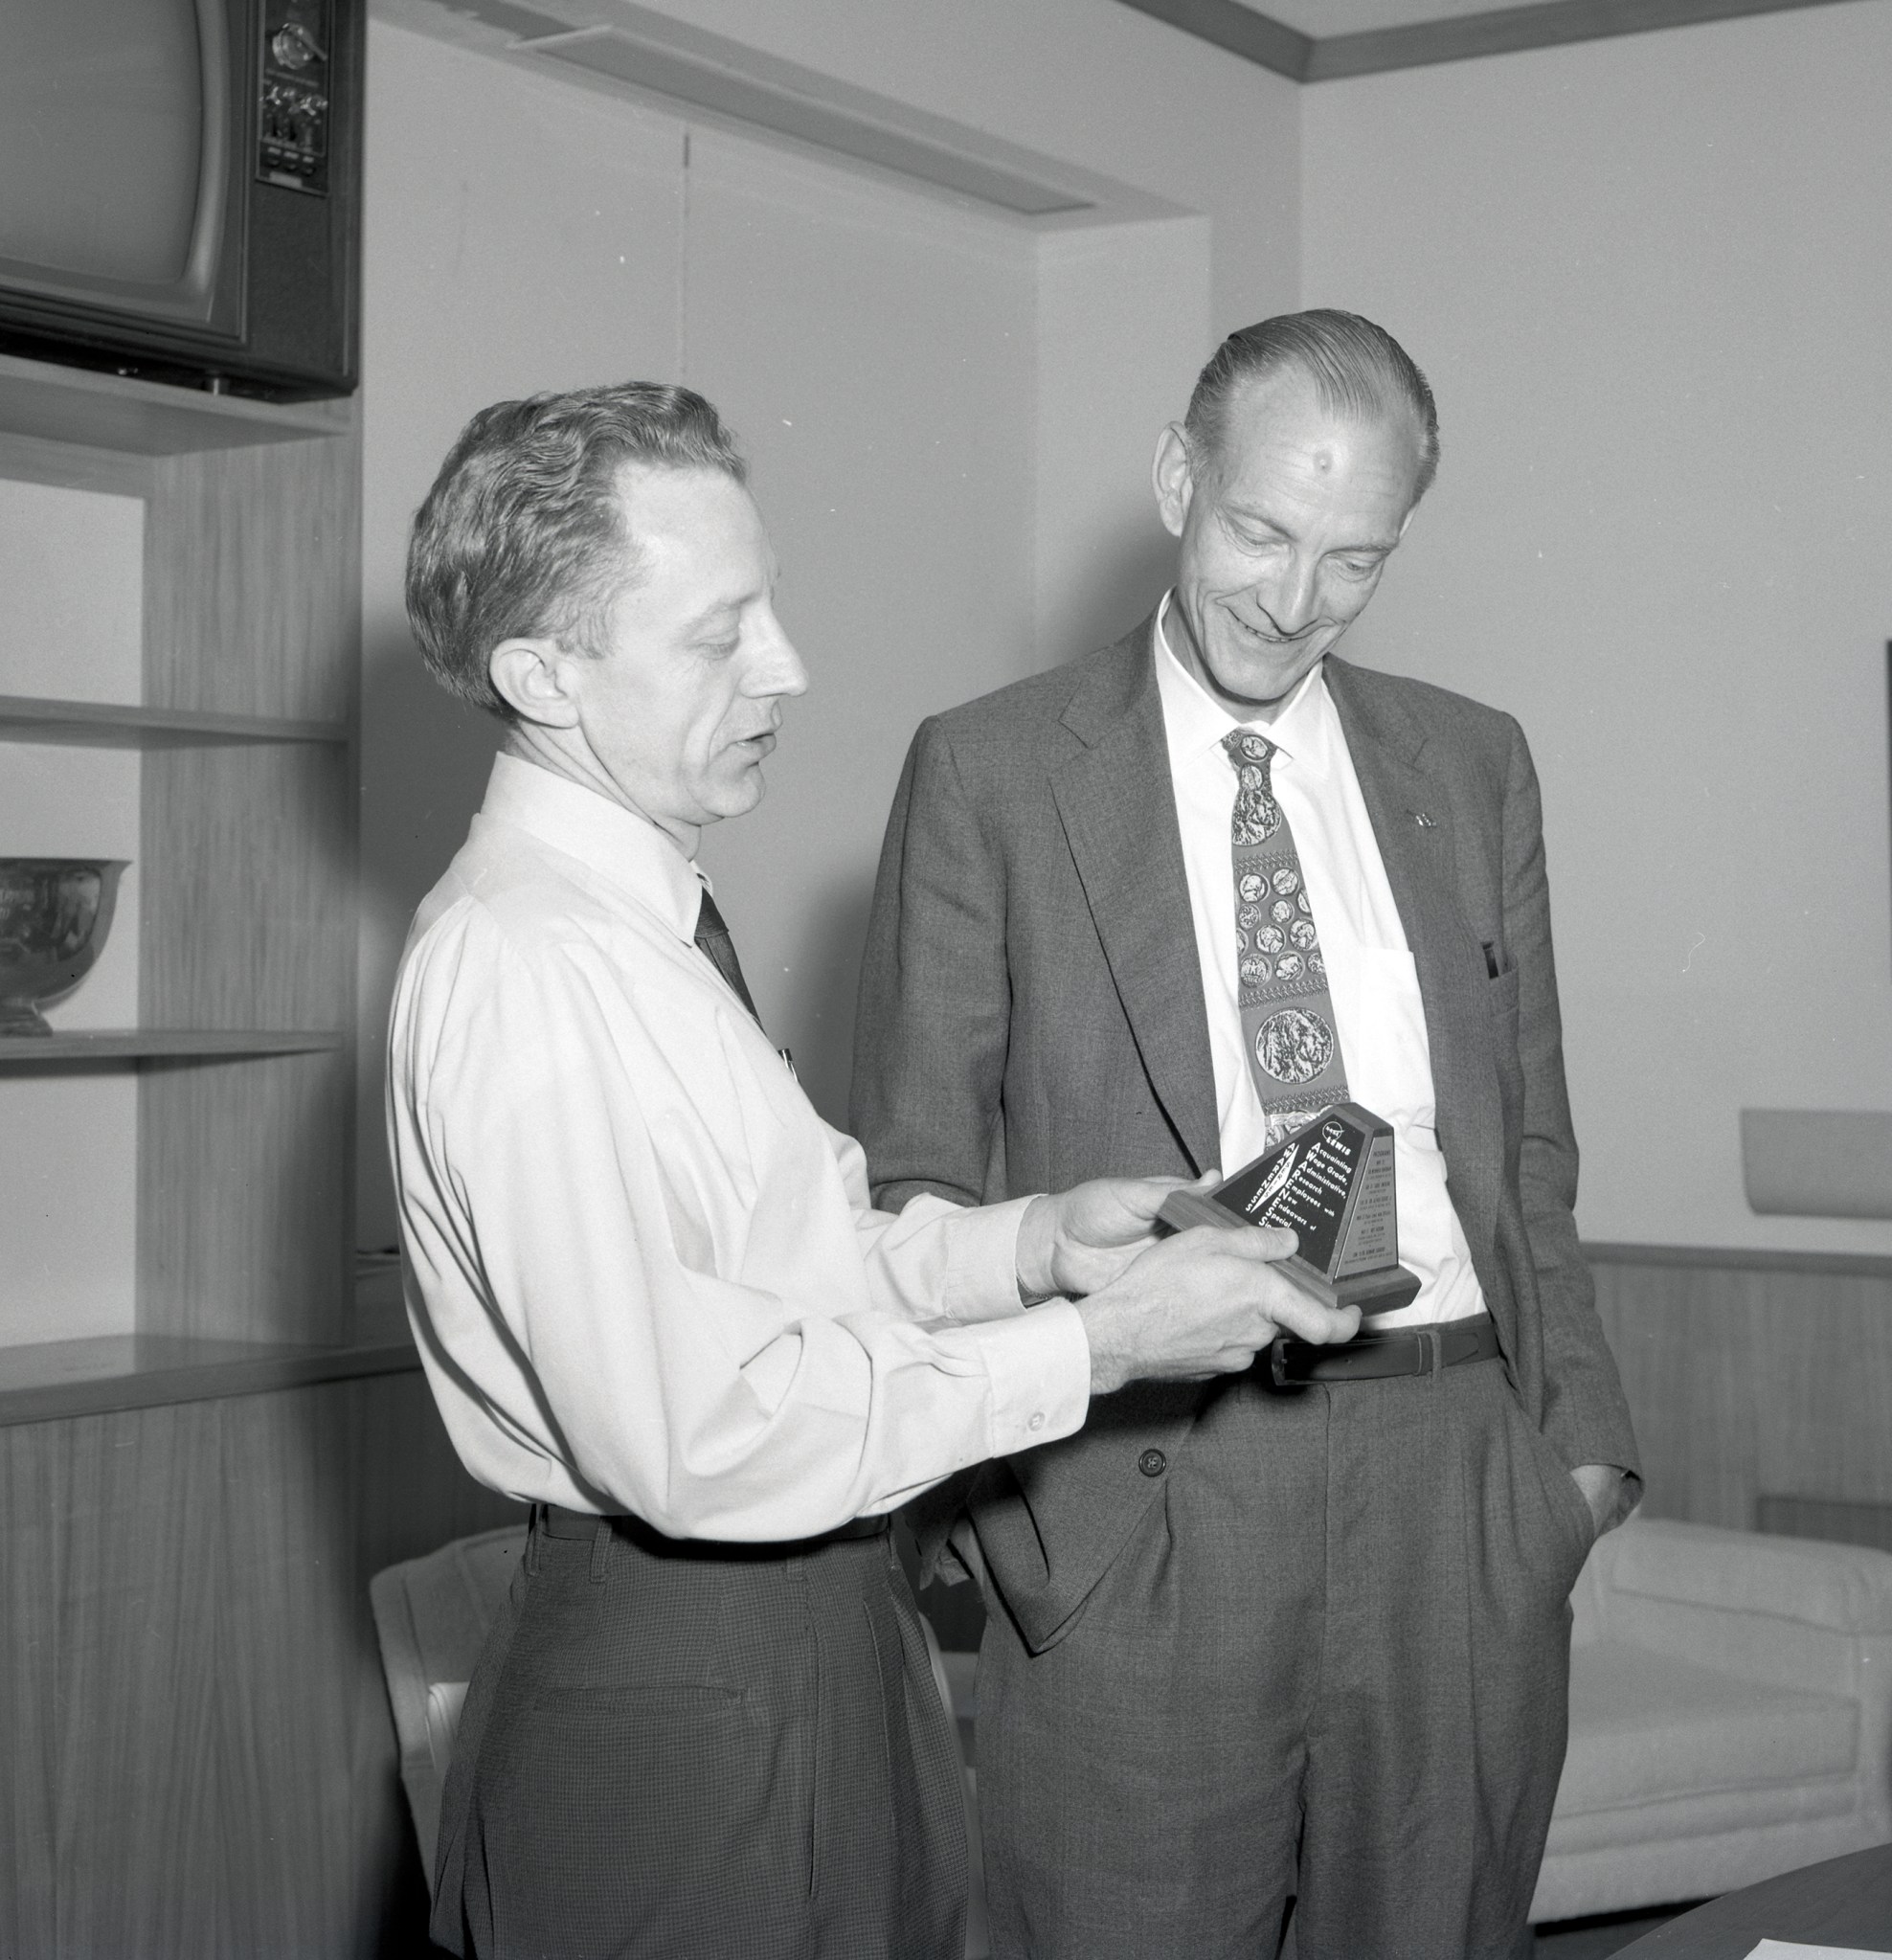 Two men examining award.